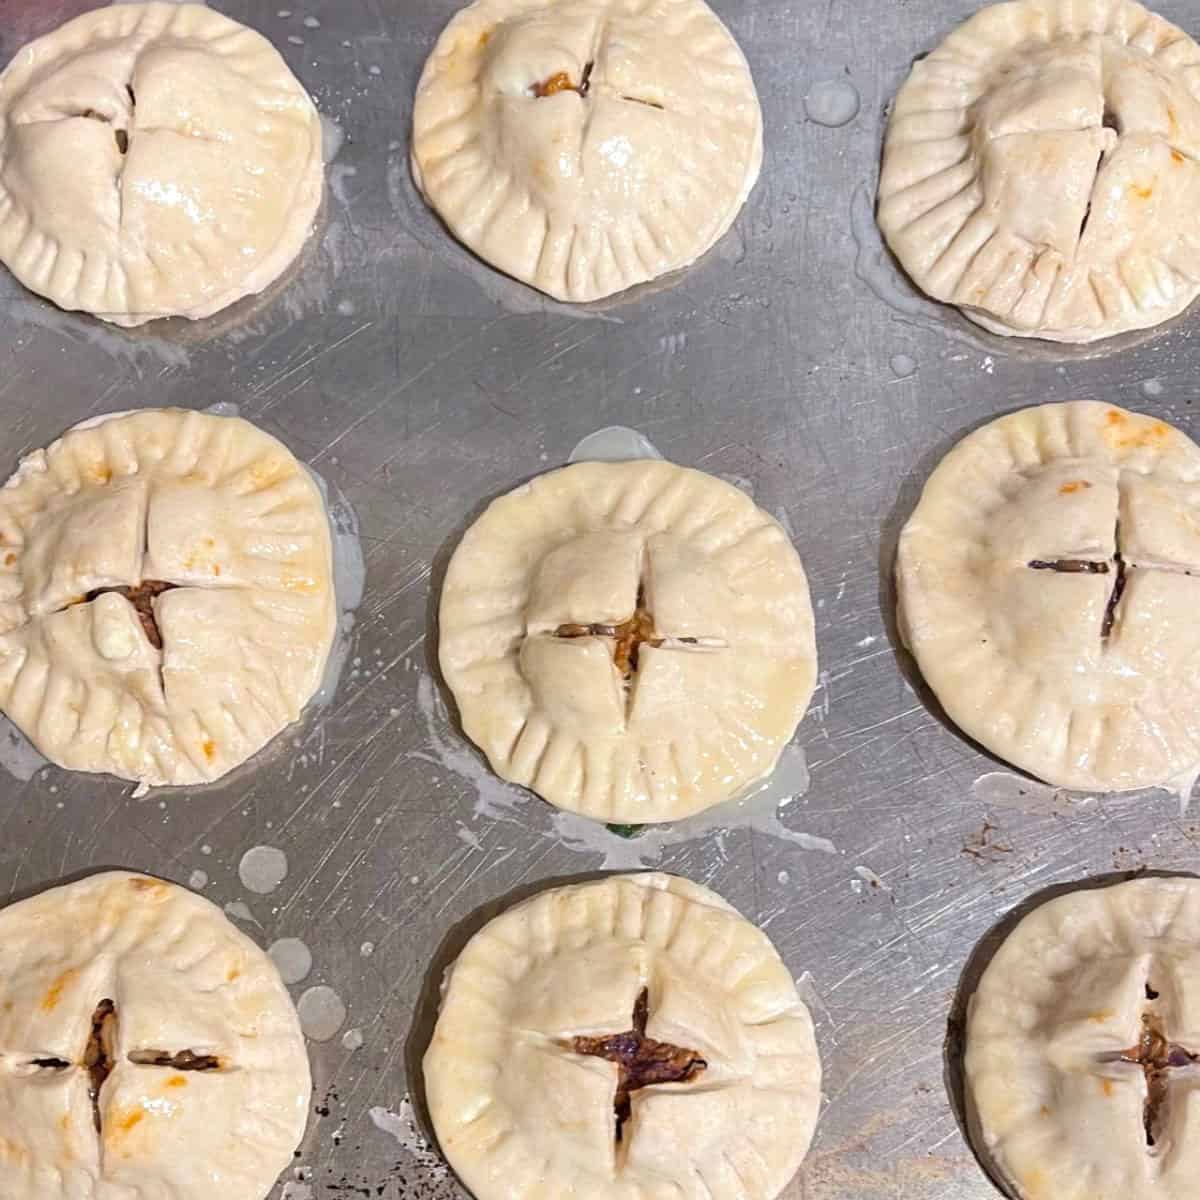 Irish hand pies ready for baking on baking sheet.